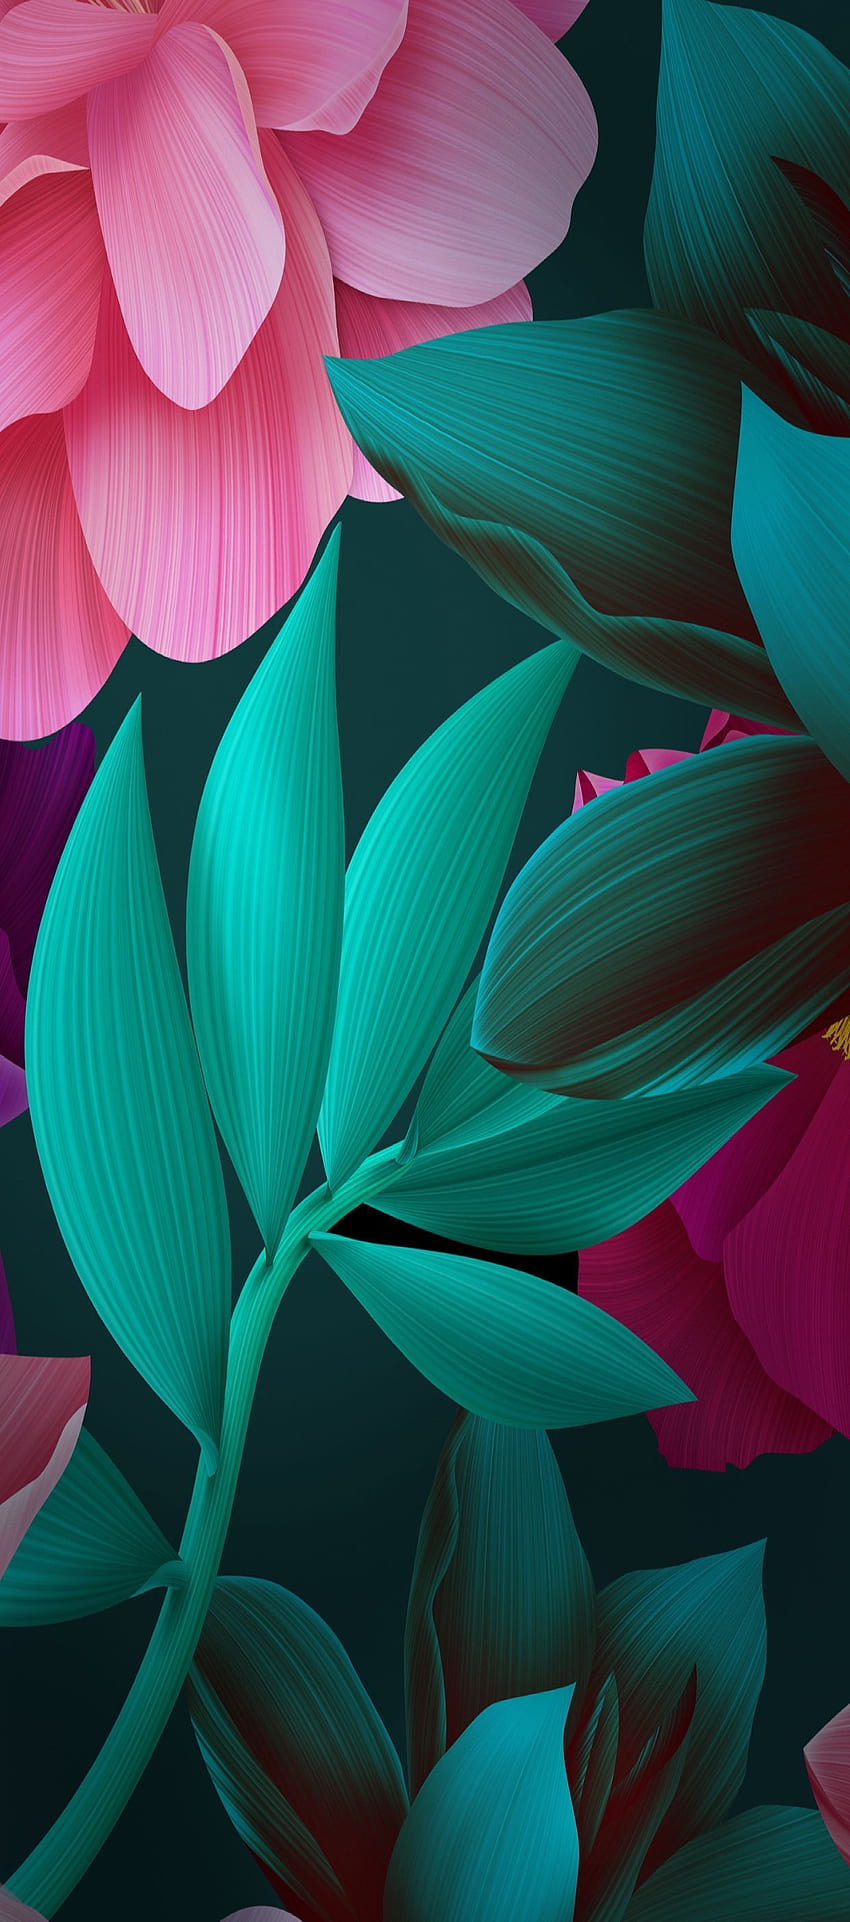 iOS 11, iPhone X, grün, schwarz, pink, geblümt, Pflanze, einfach, abstrakt, Apfel, , iphone 8, sauber, Schönheit,. Duvar kağıtları, Sanatsal baskı, Soyut resimler, Pink Black Minimalist HD-Handy-Hintergrundbild